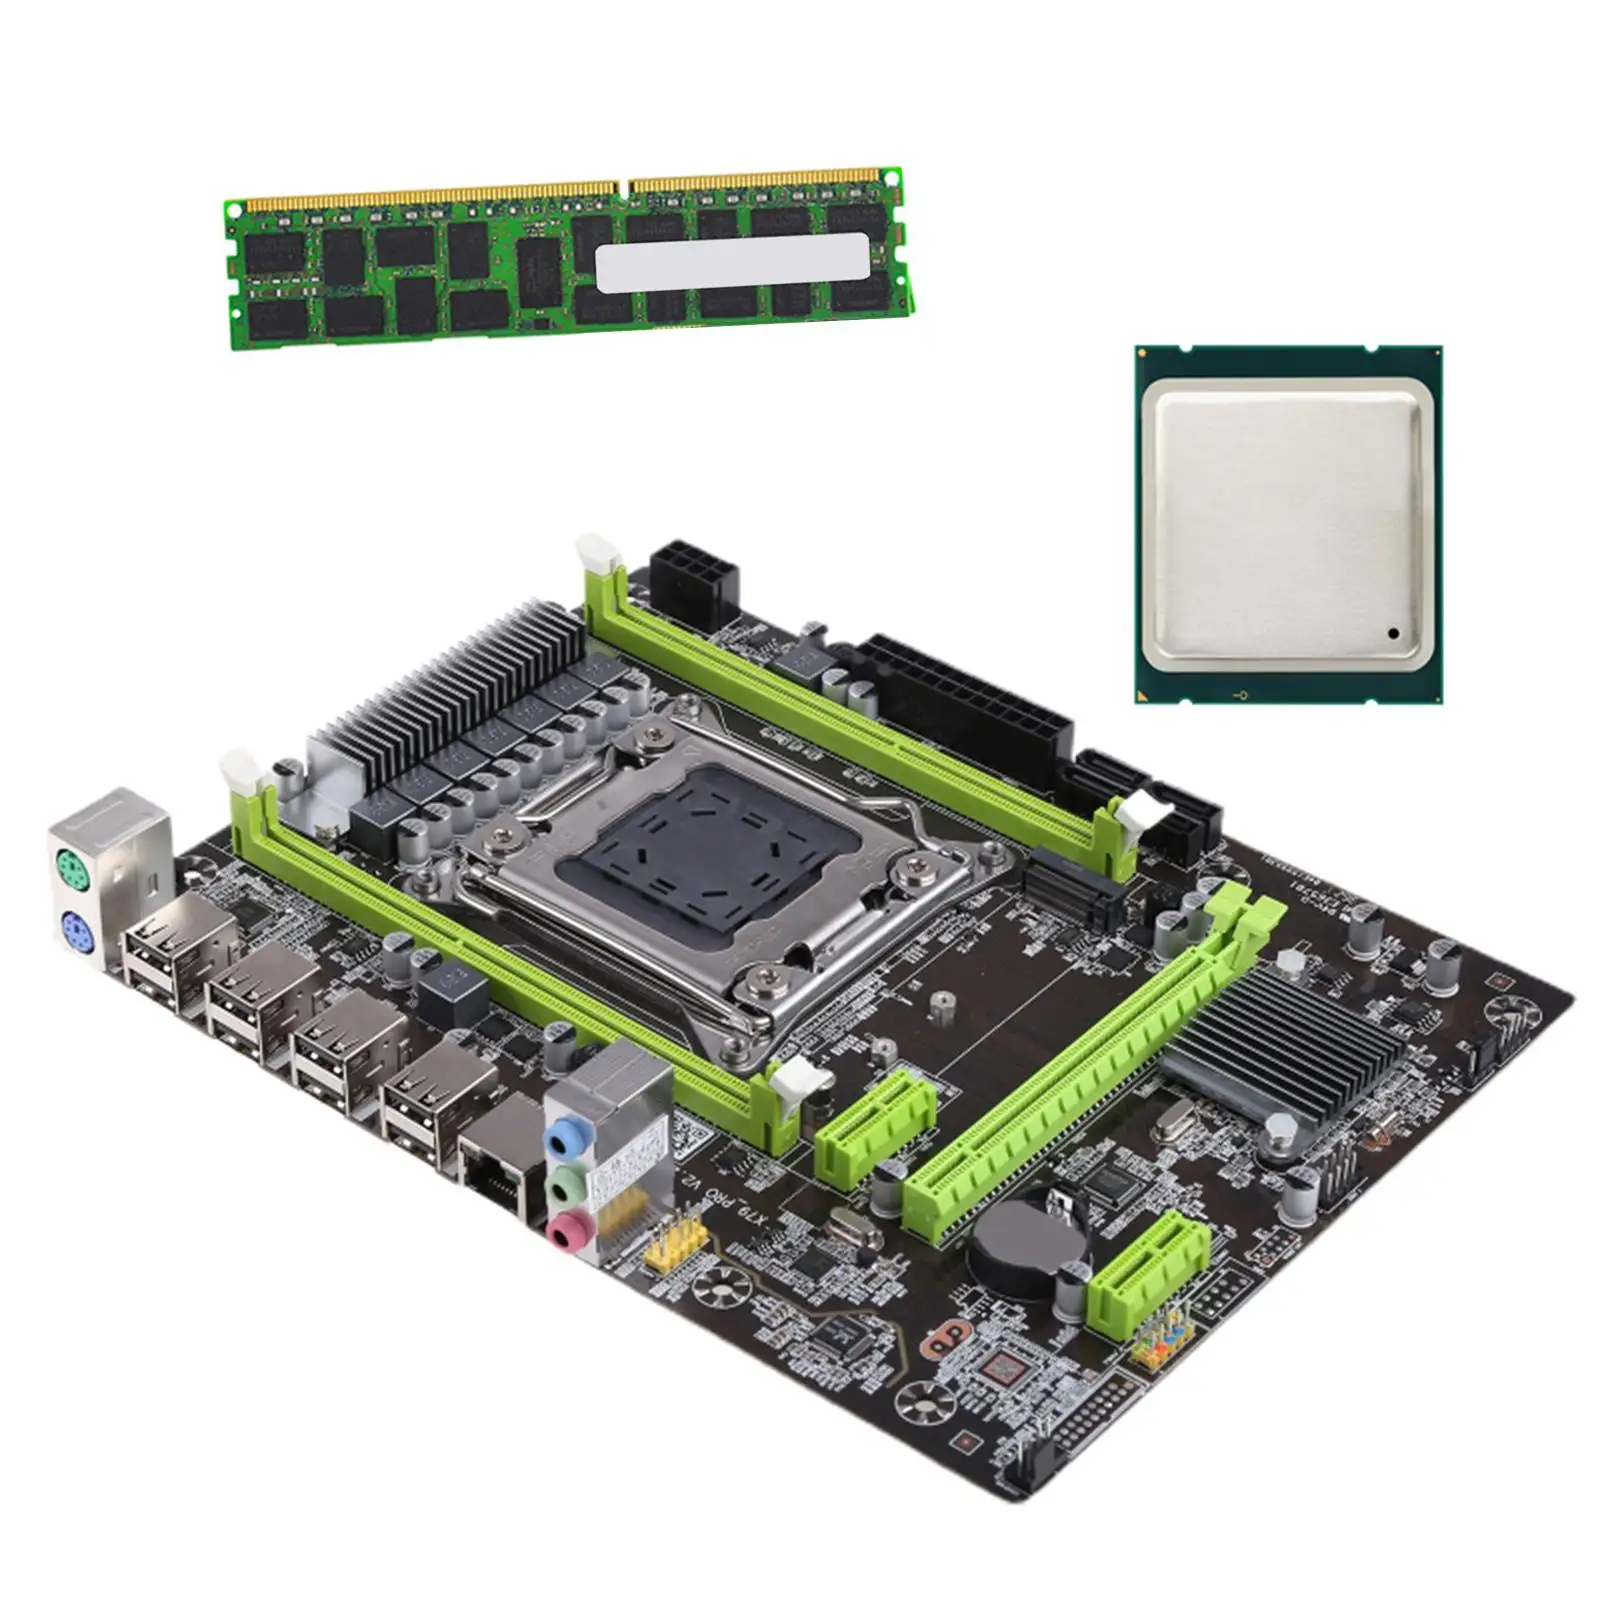 x79 Pro Motherboard Durable 16x Stable Performance 16GB Memory Capacity LGA 2011 4x SATA2.0 for E5-2640 E5-2650 E5-2670 E5-2660